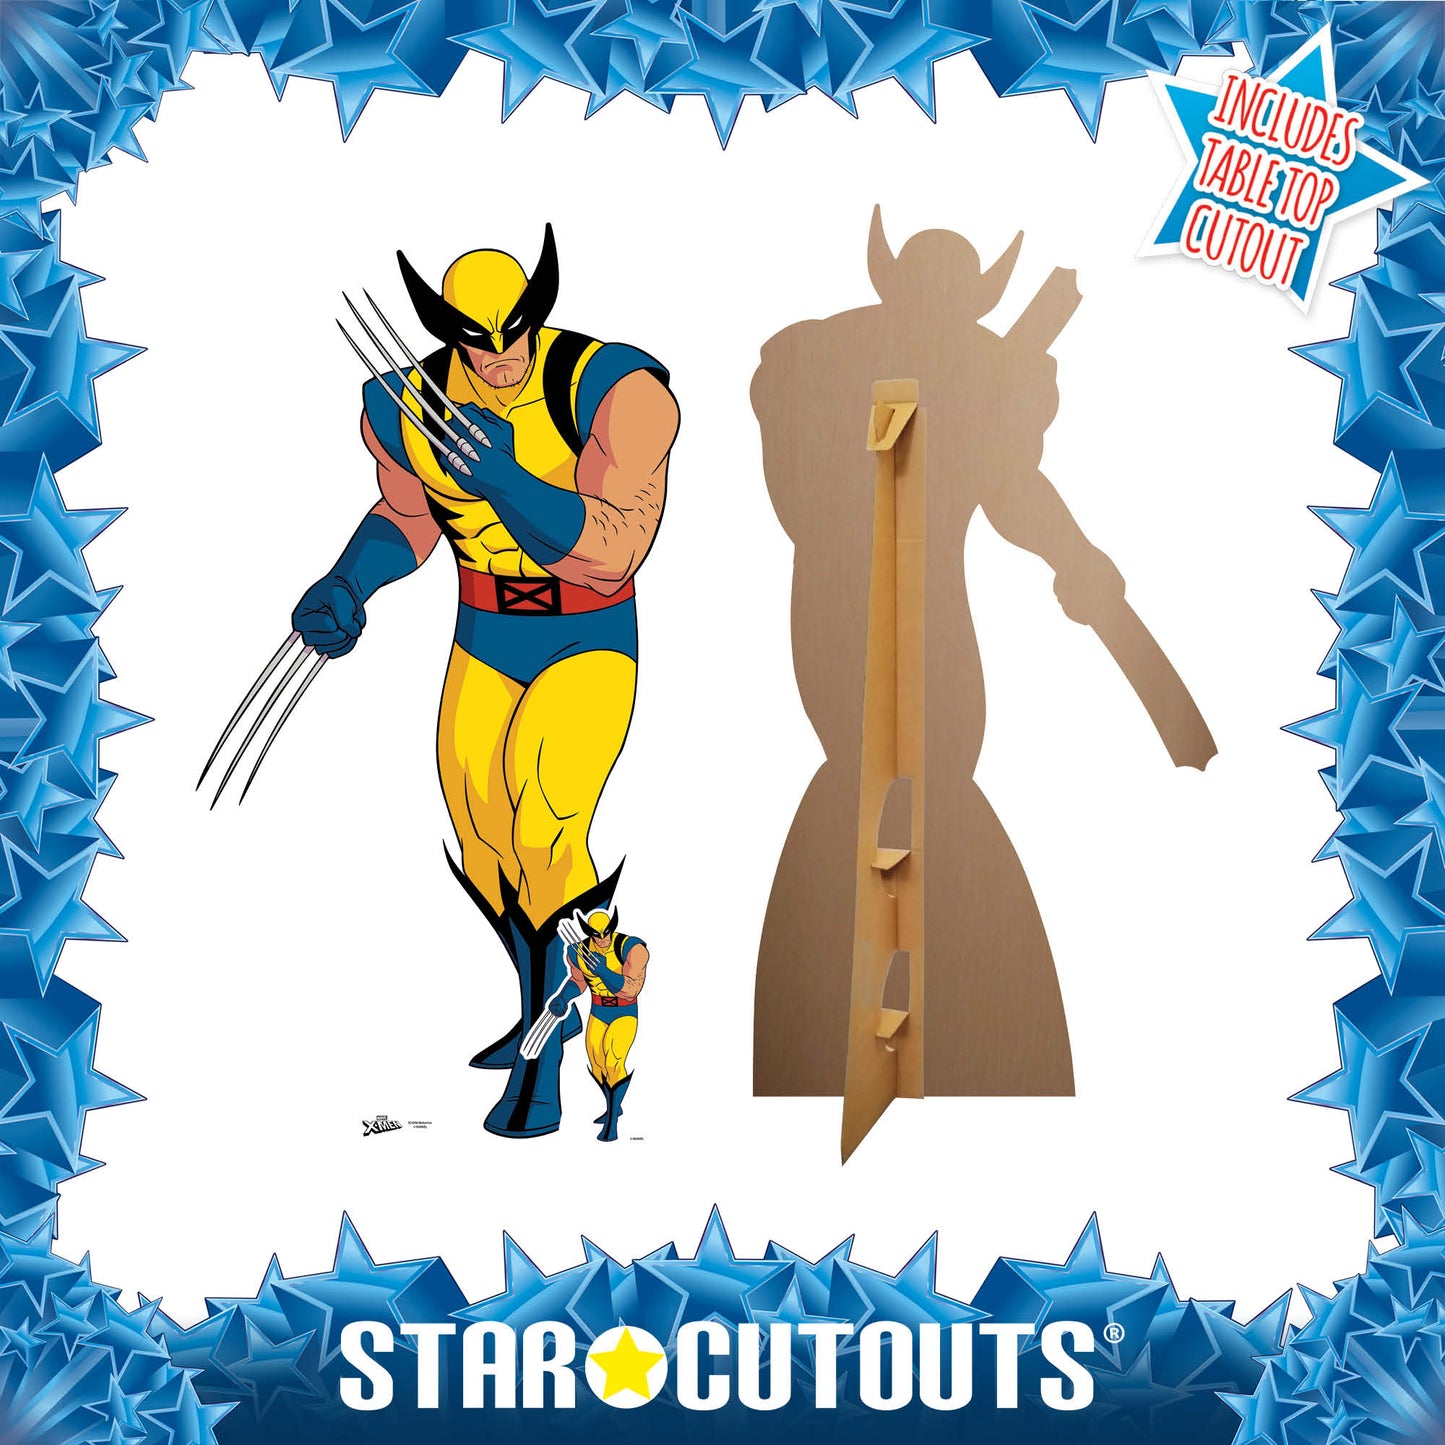 AKA Logan - Wolverine X-Men Cardboard Cut Out Height 166cm